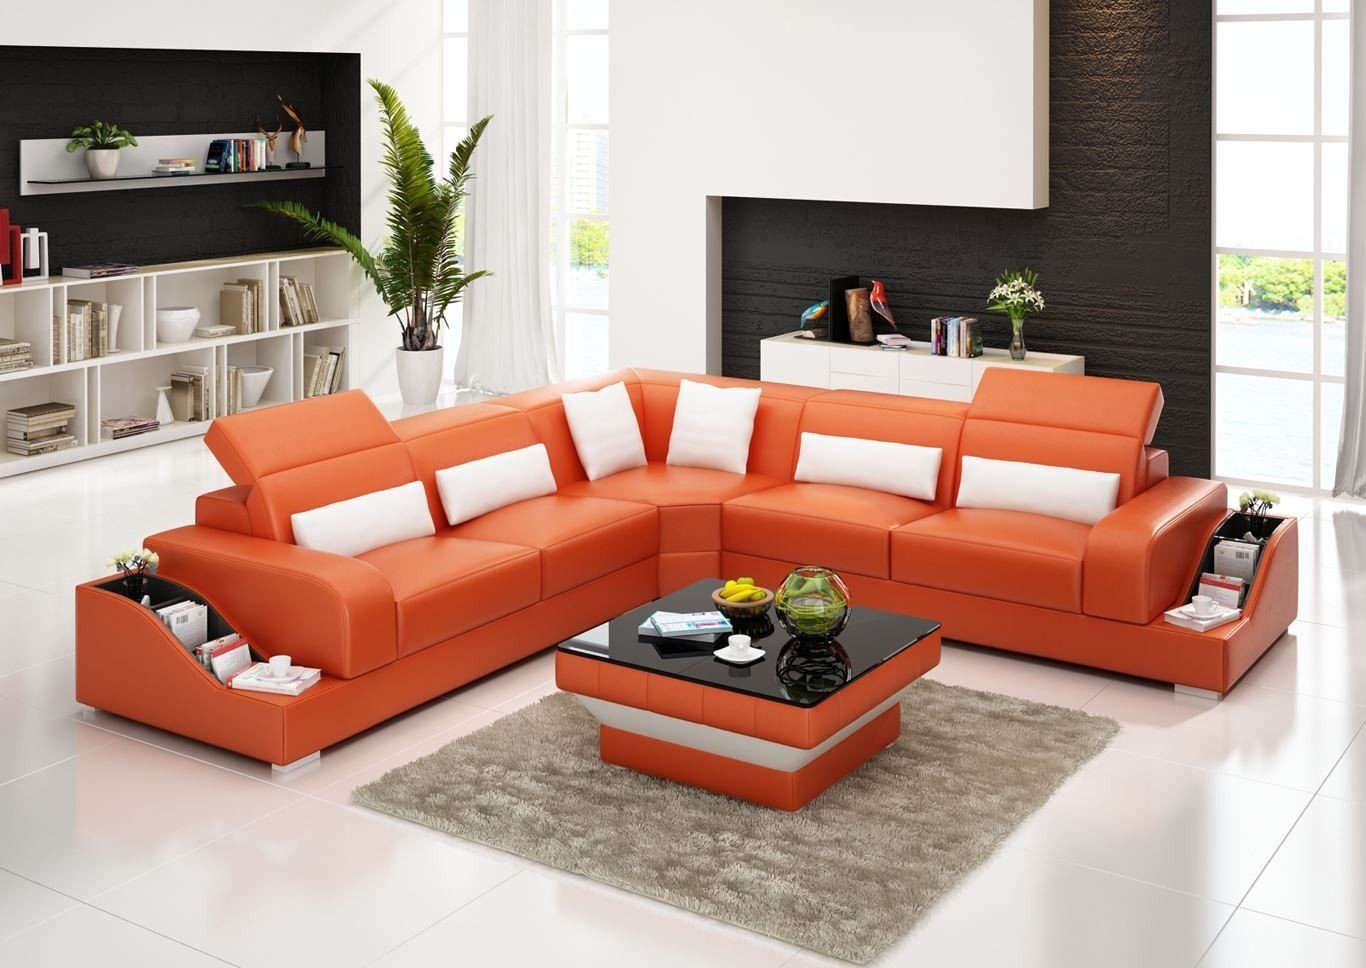 JVmoebel Ecksofa Wohnlandschaft in Ecksofa Eck Couch Made Europe Orange Leder Polster Garnitur, Sofa Sitz